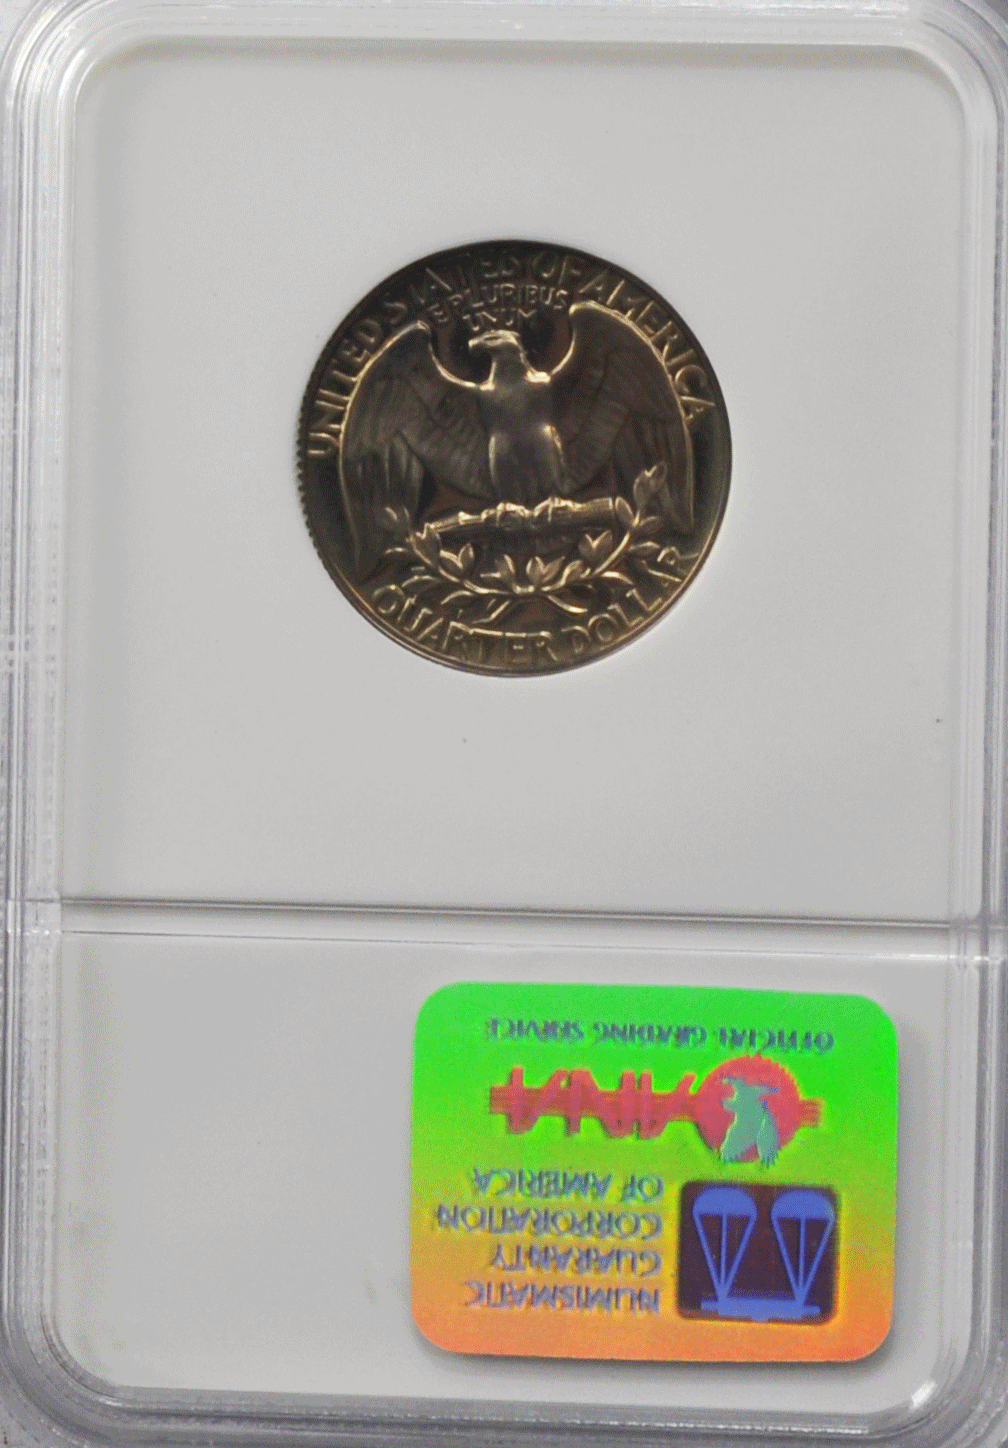 1969 S 25c Washington Proof Quarter Dollar NGC PF69 Cameo Gem Unc